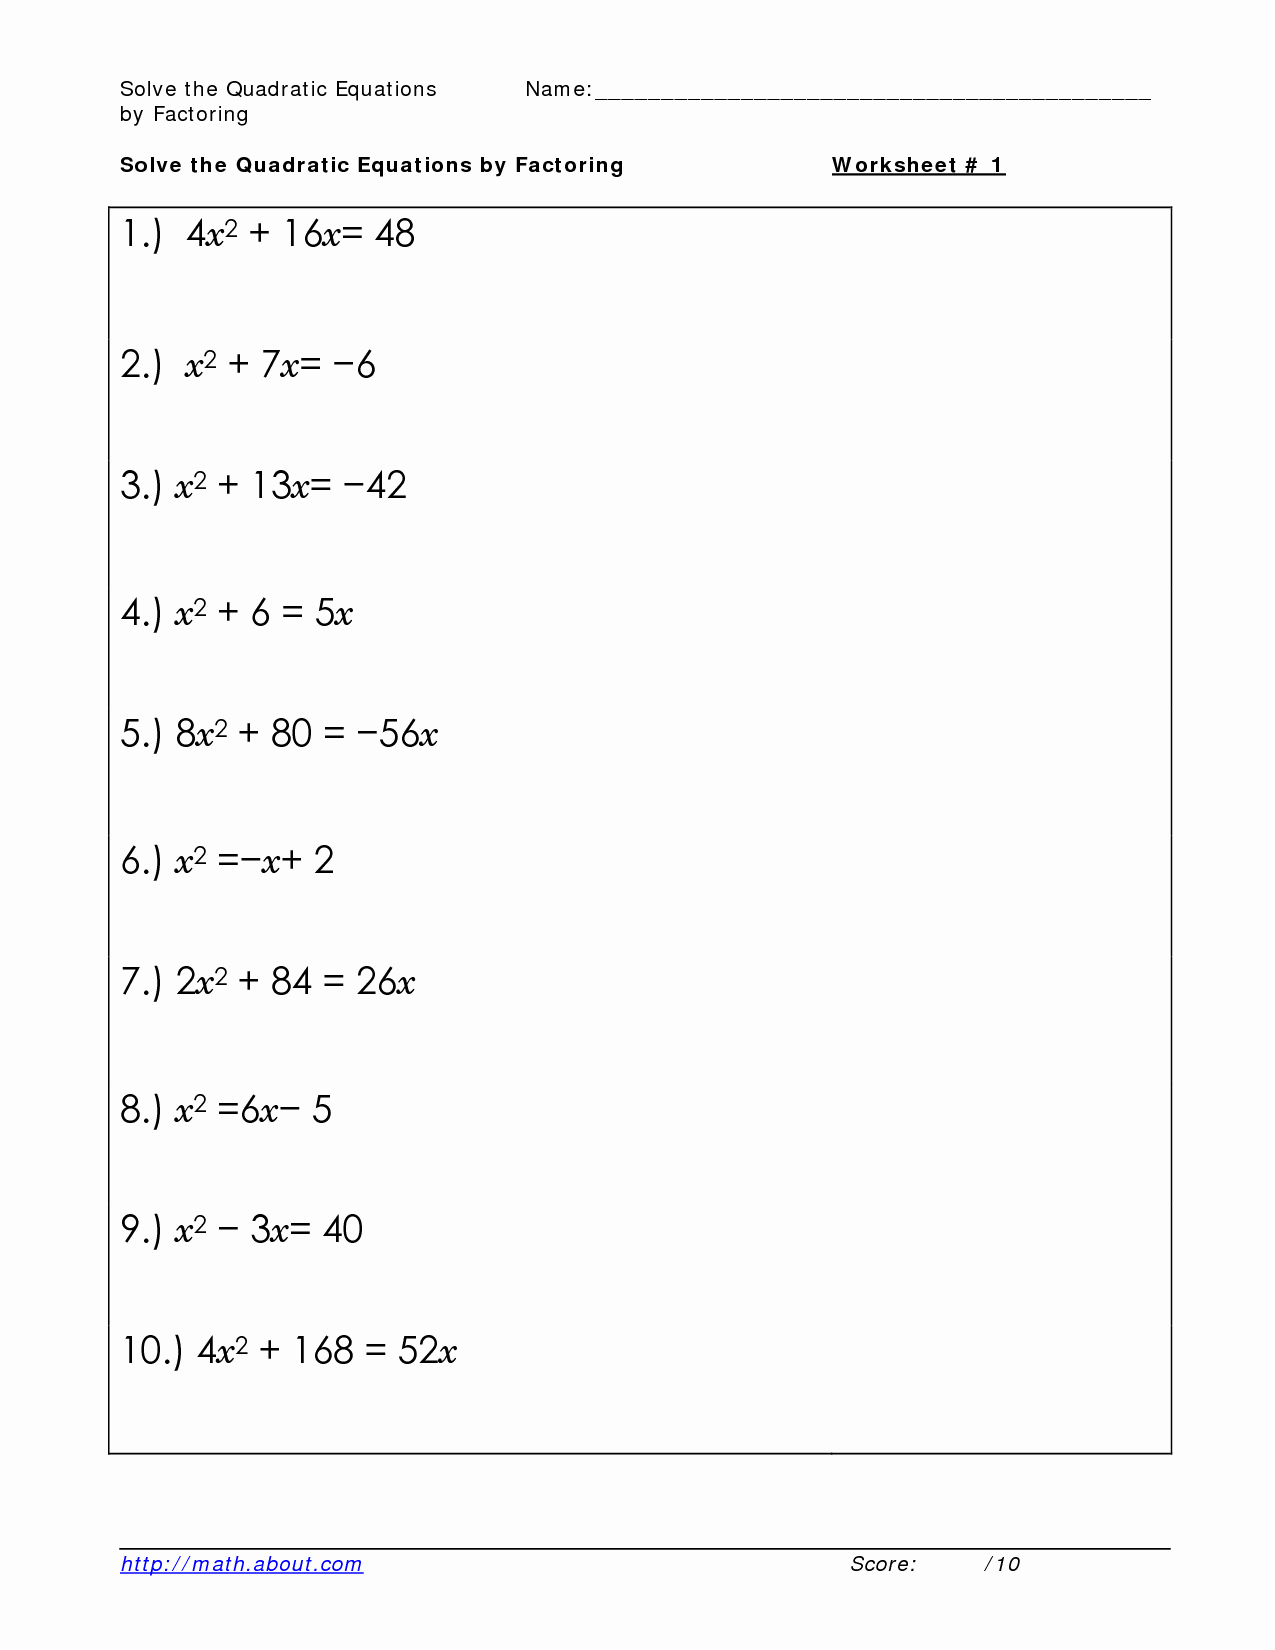 solving quadratic equations worksheets